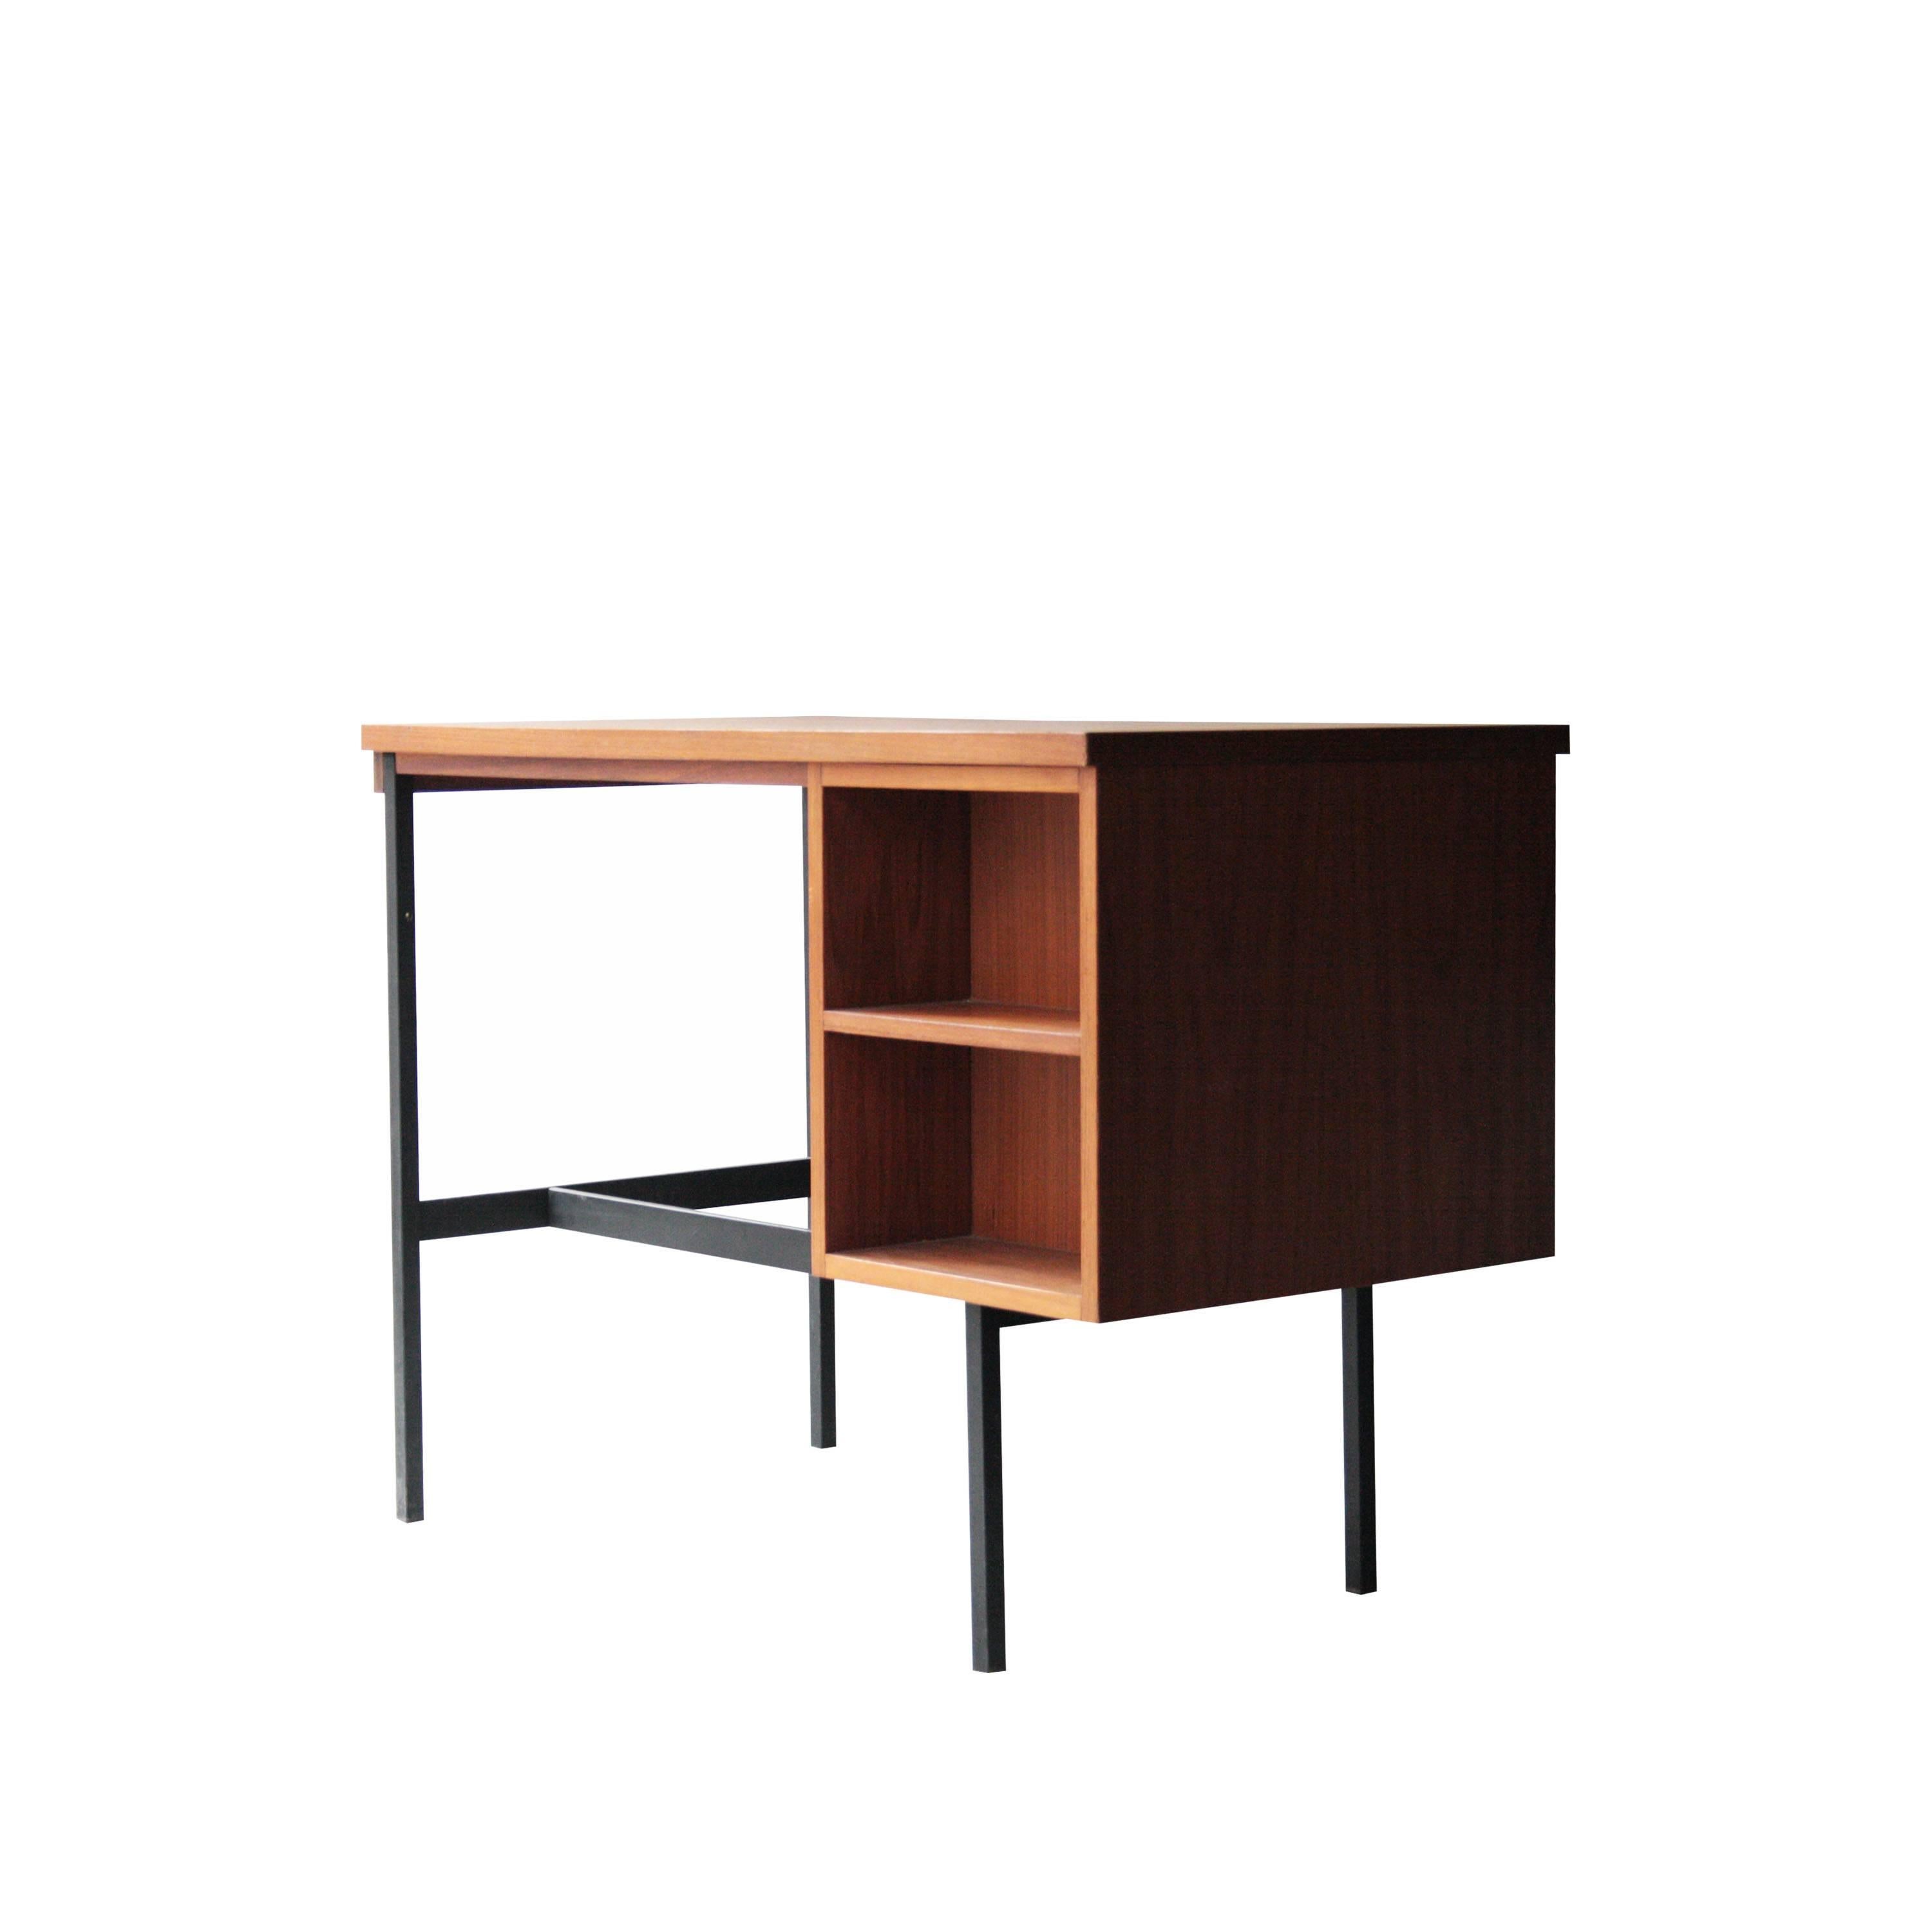 Dutch Desk Designed by Cees Braakman. Netherlands, 1950.